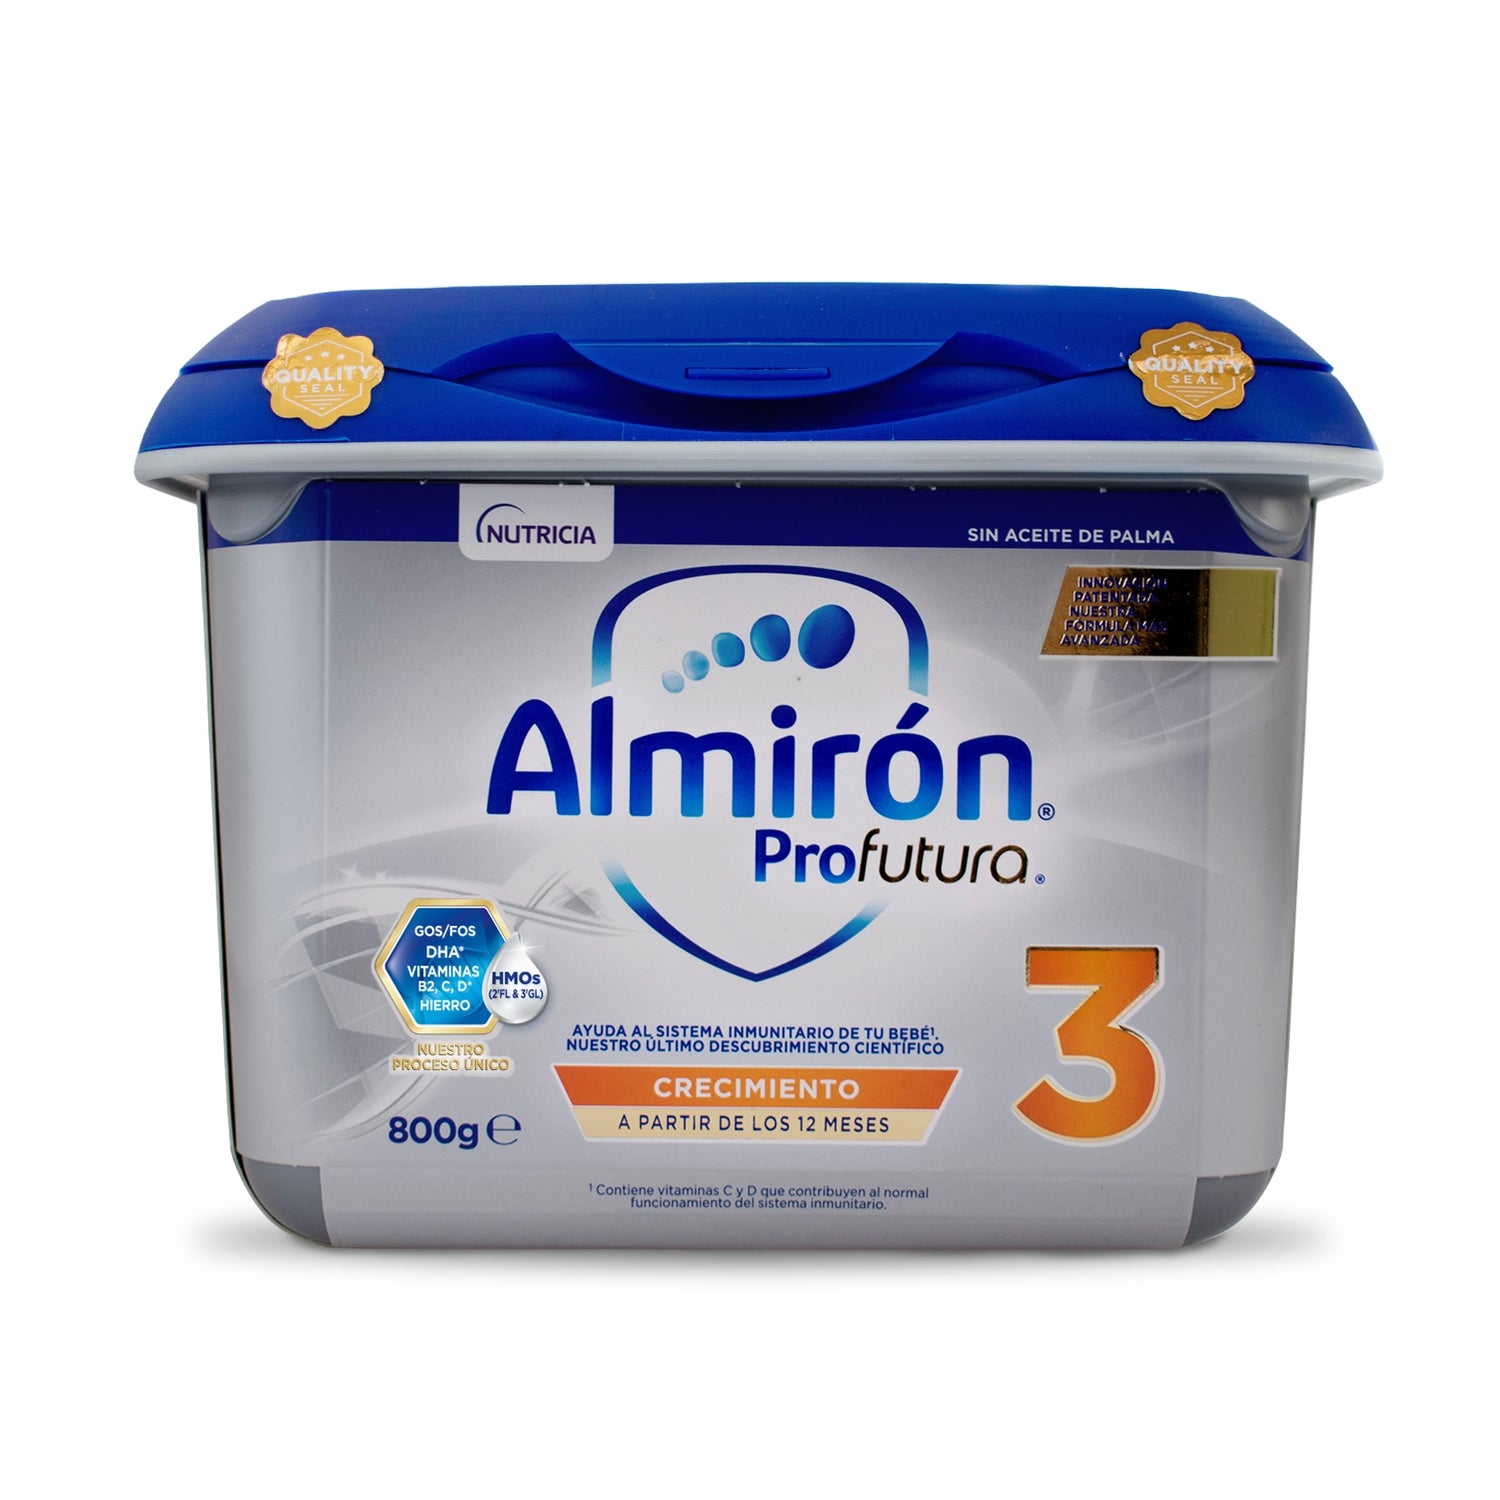 Almirón 3 ProFutura DuoBiotik leche de fórmula